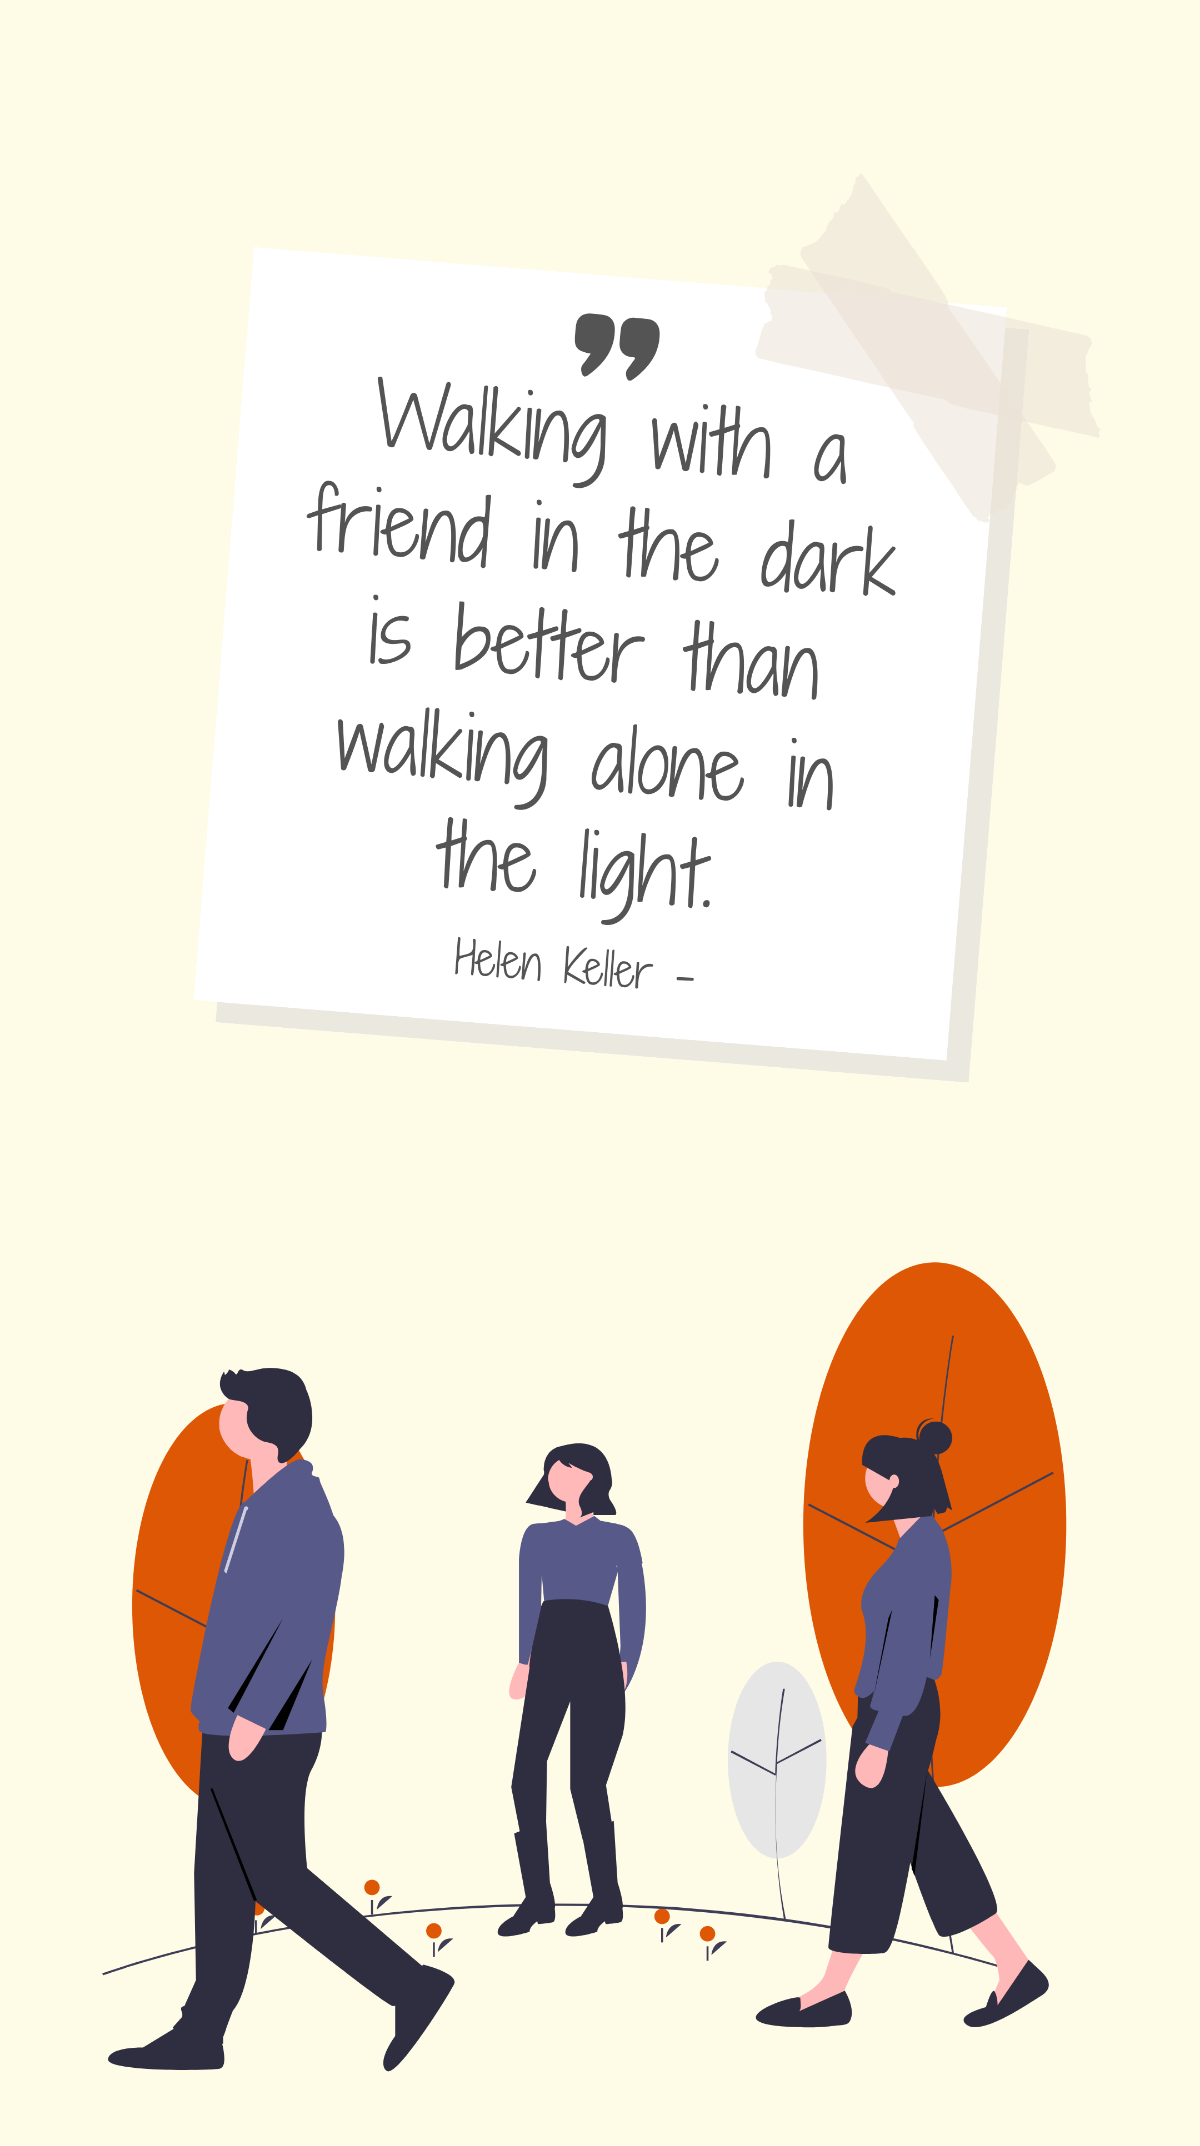 Helen Keller - Walking with a friend in the dark is better than walking alone in the light. Template